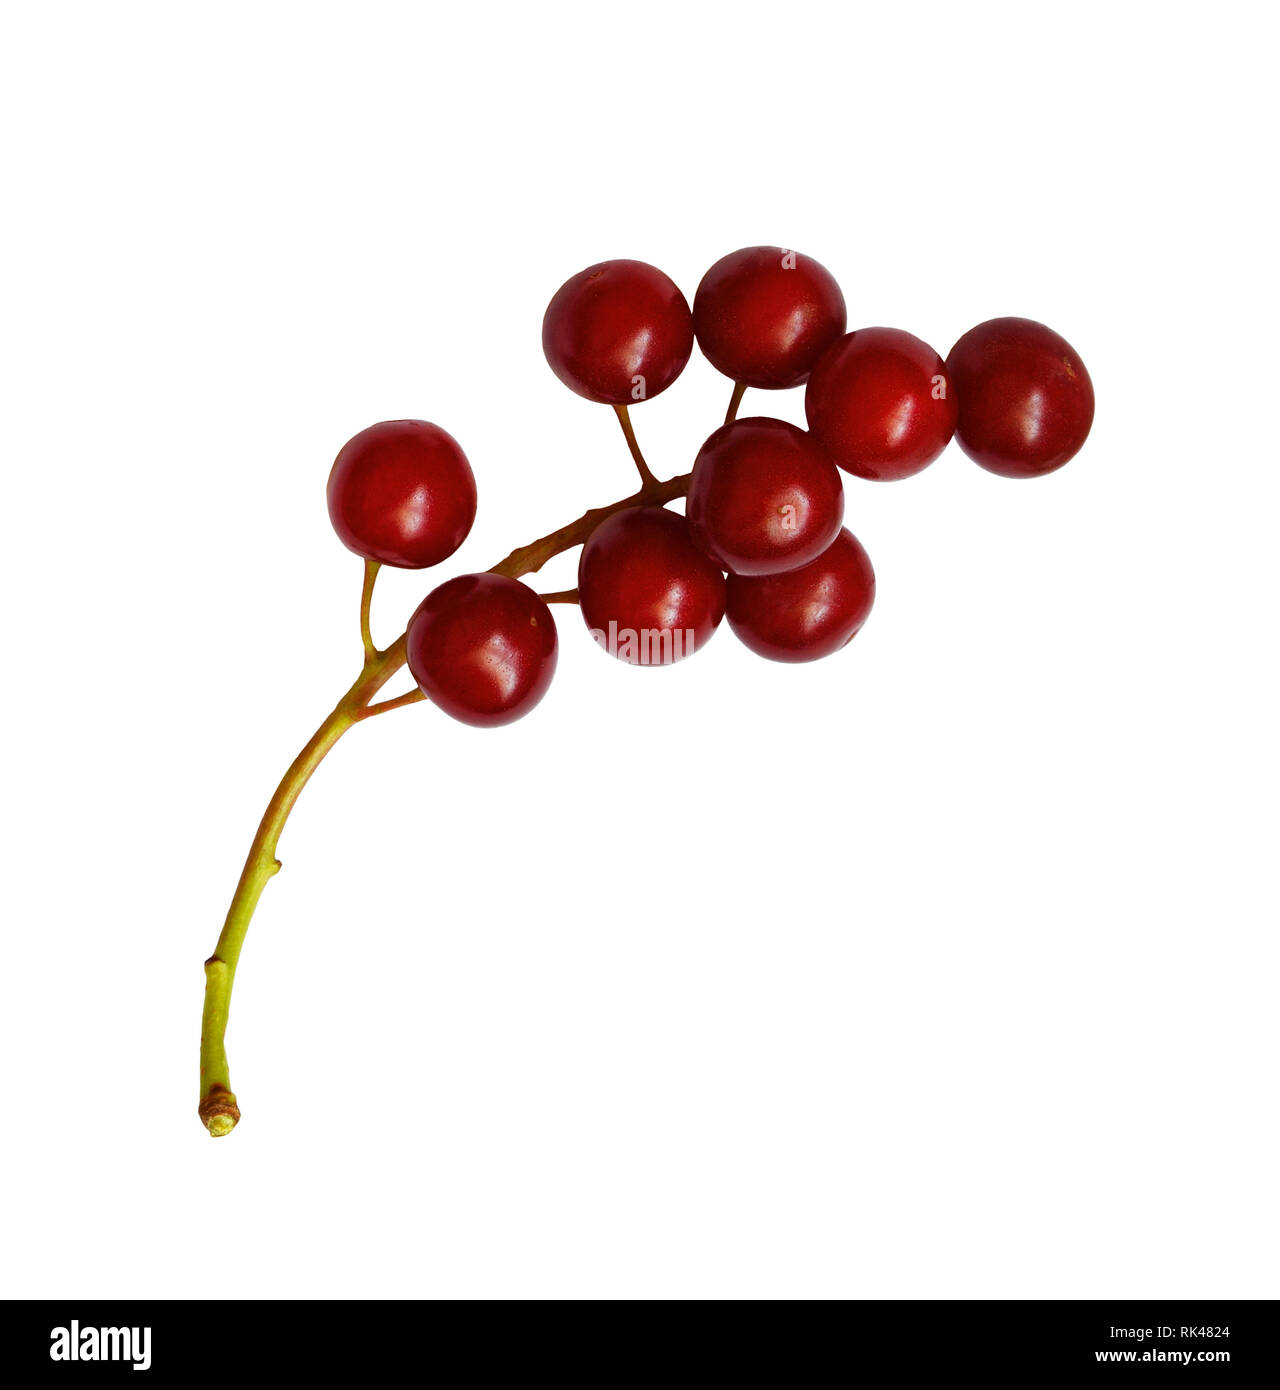 Red bird-cherries isolated on white Stock Photo